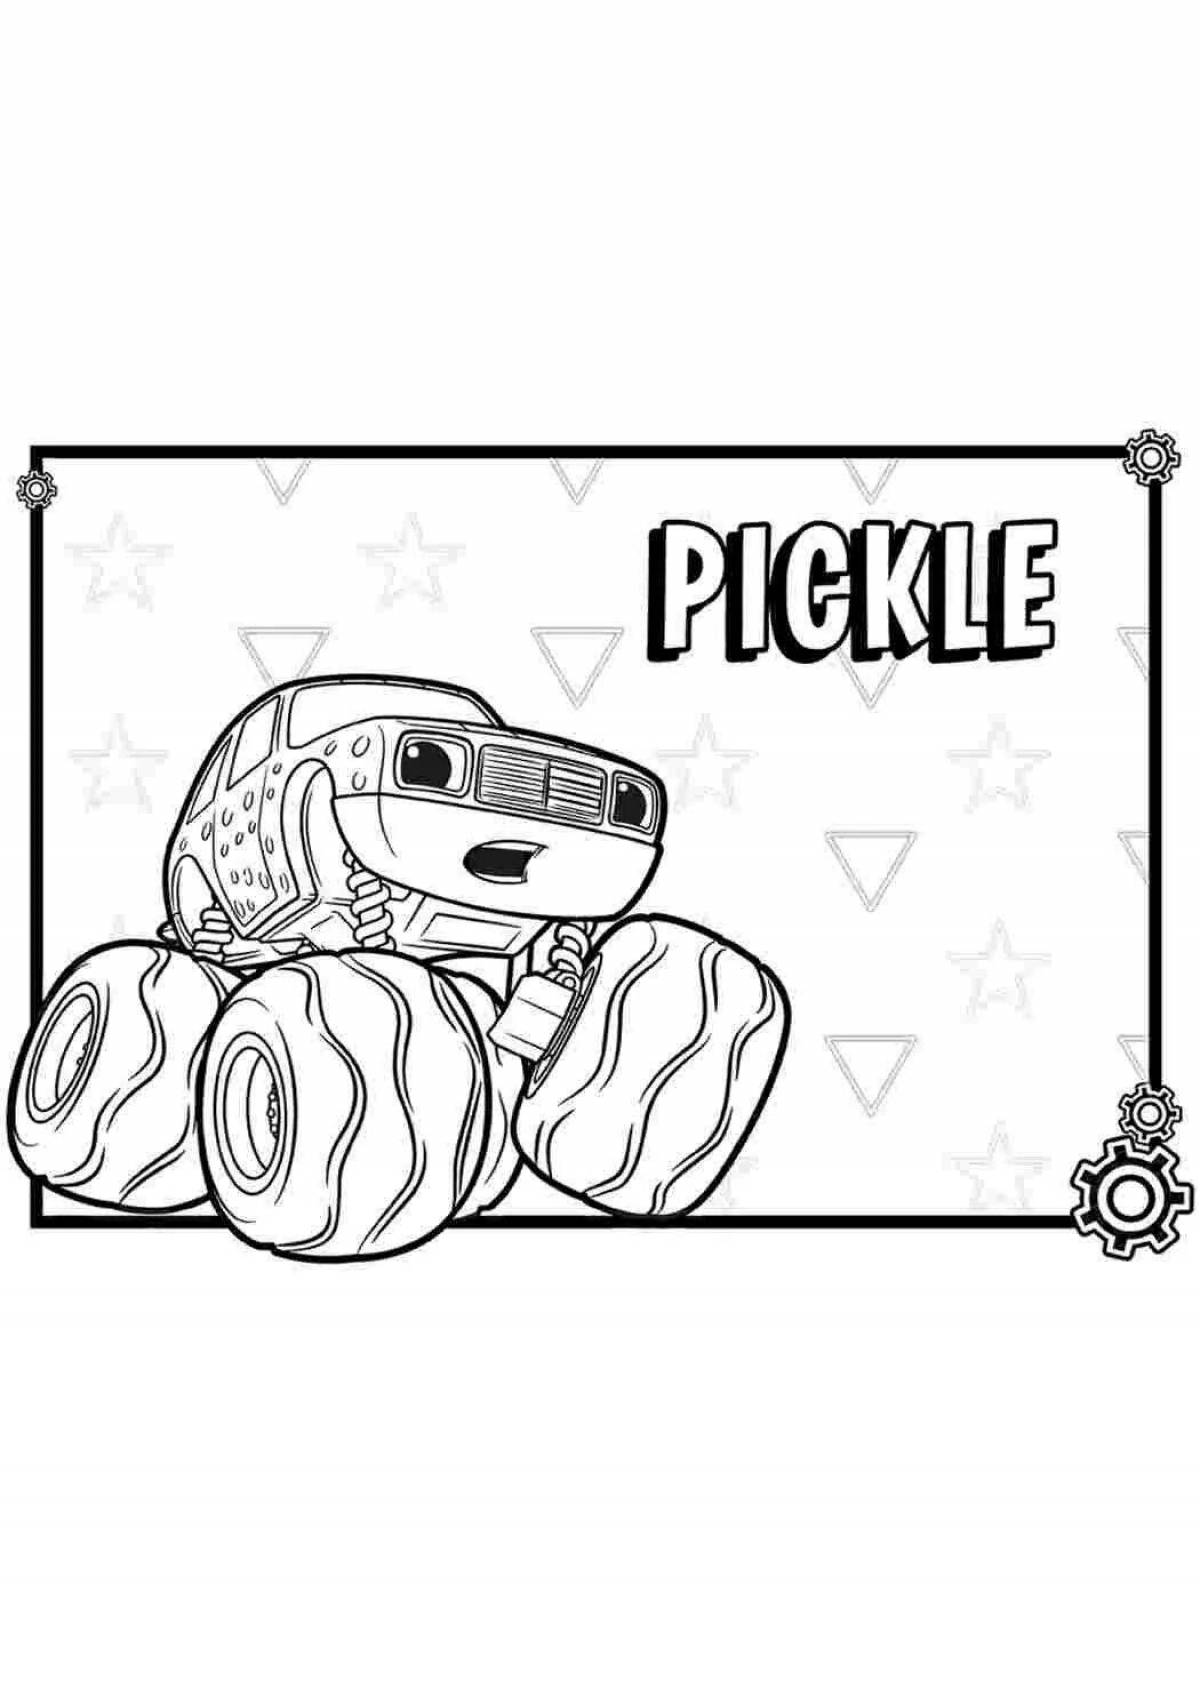 Flash pickle #1